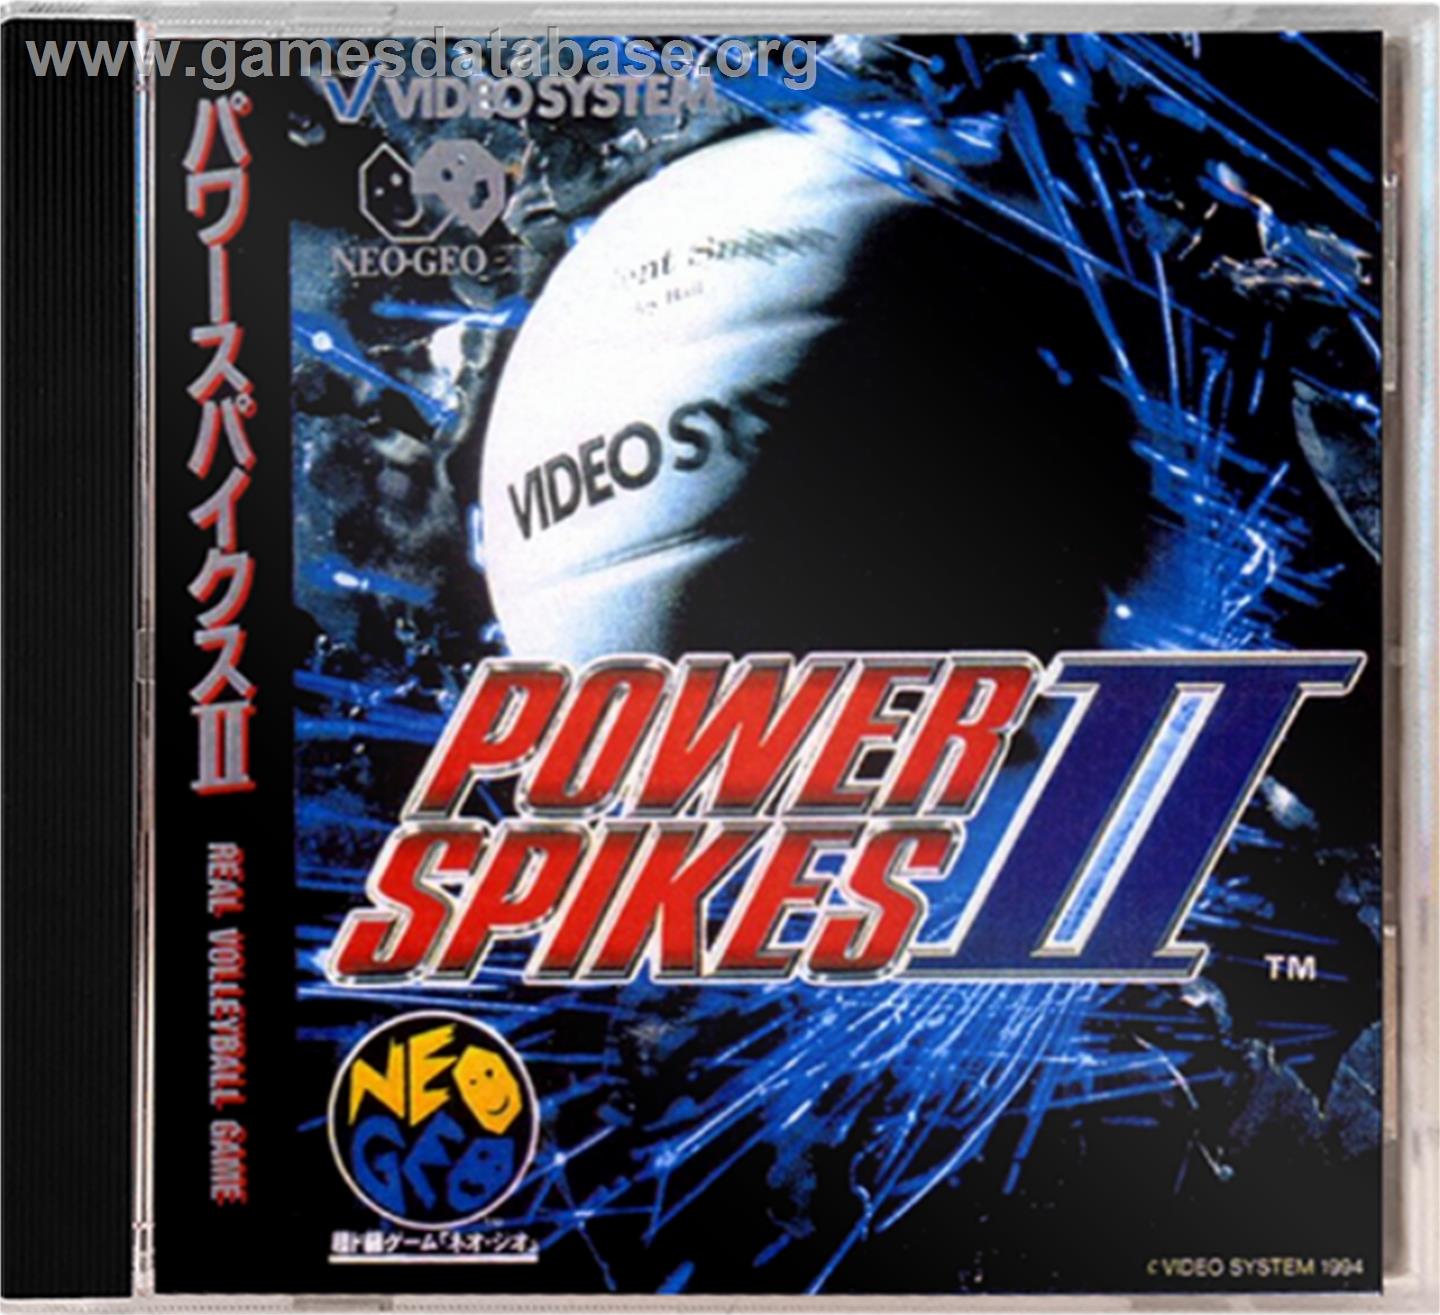 Power Spikes II - SNK Neo-Geo CD - Artwork - Box